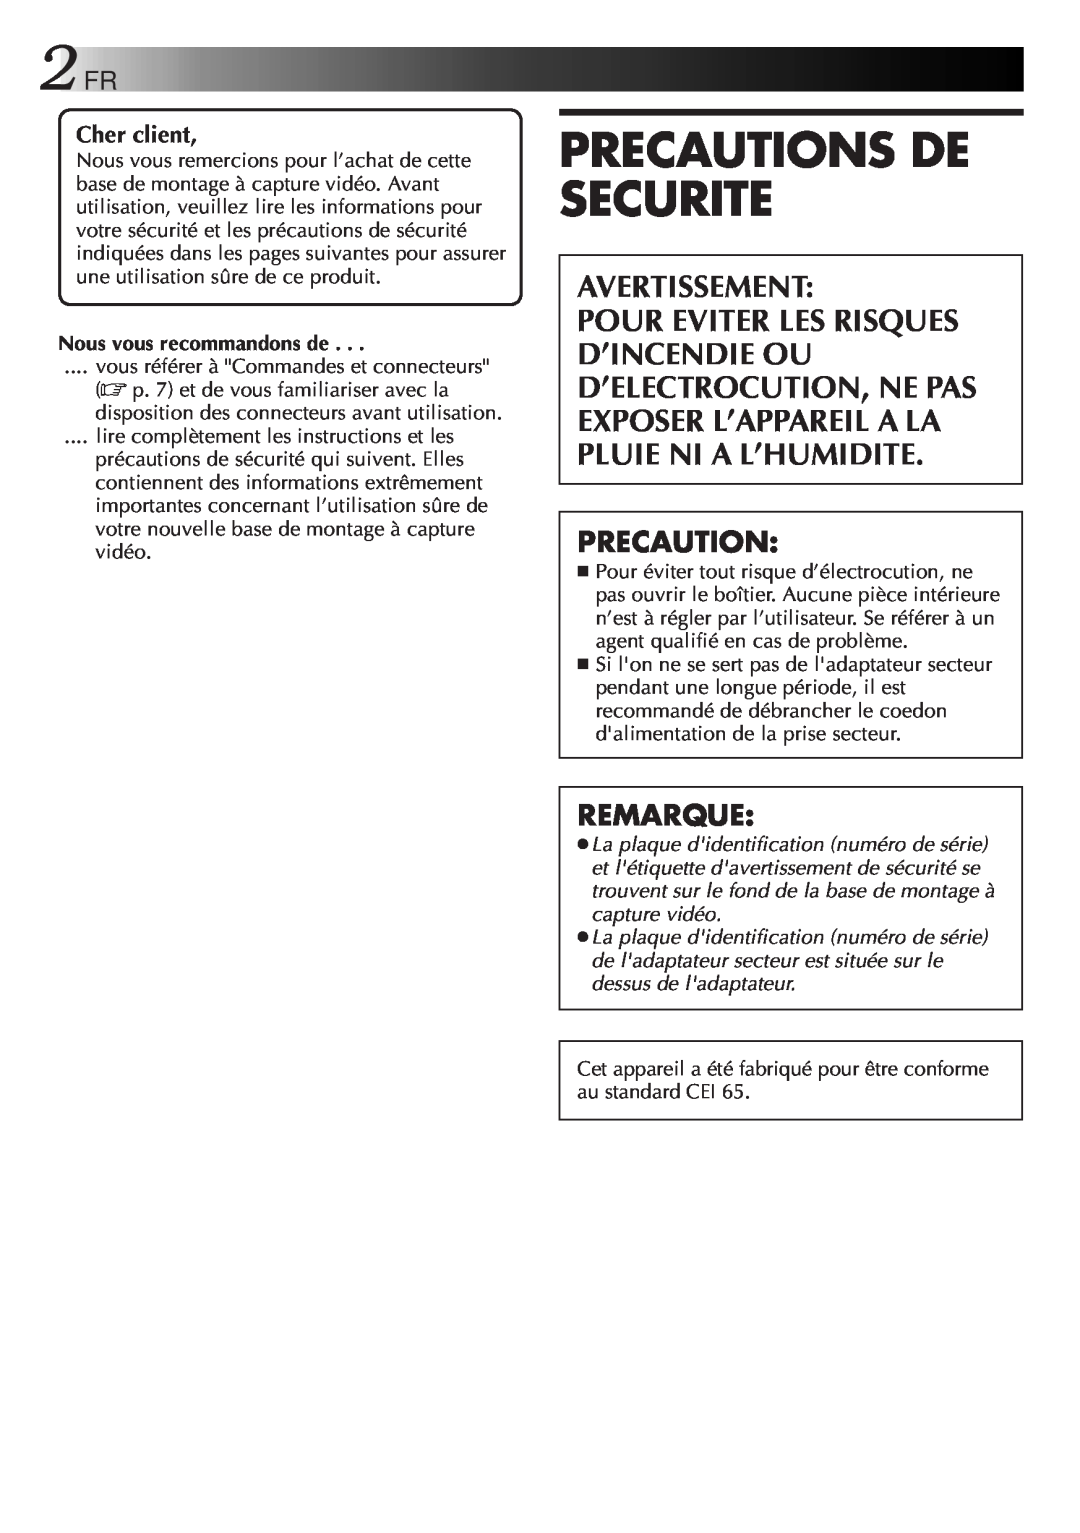 JVC GV-CB3E manual Precautions De Securite, Avertissement, Remarque 